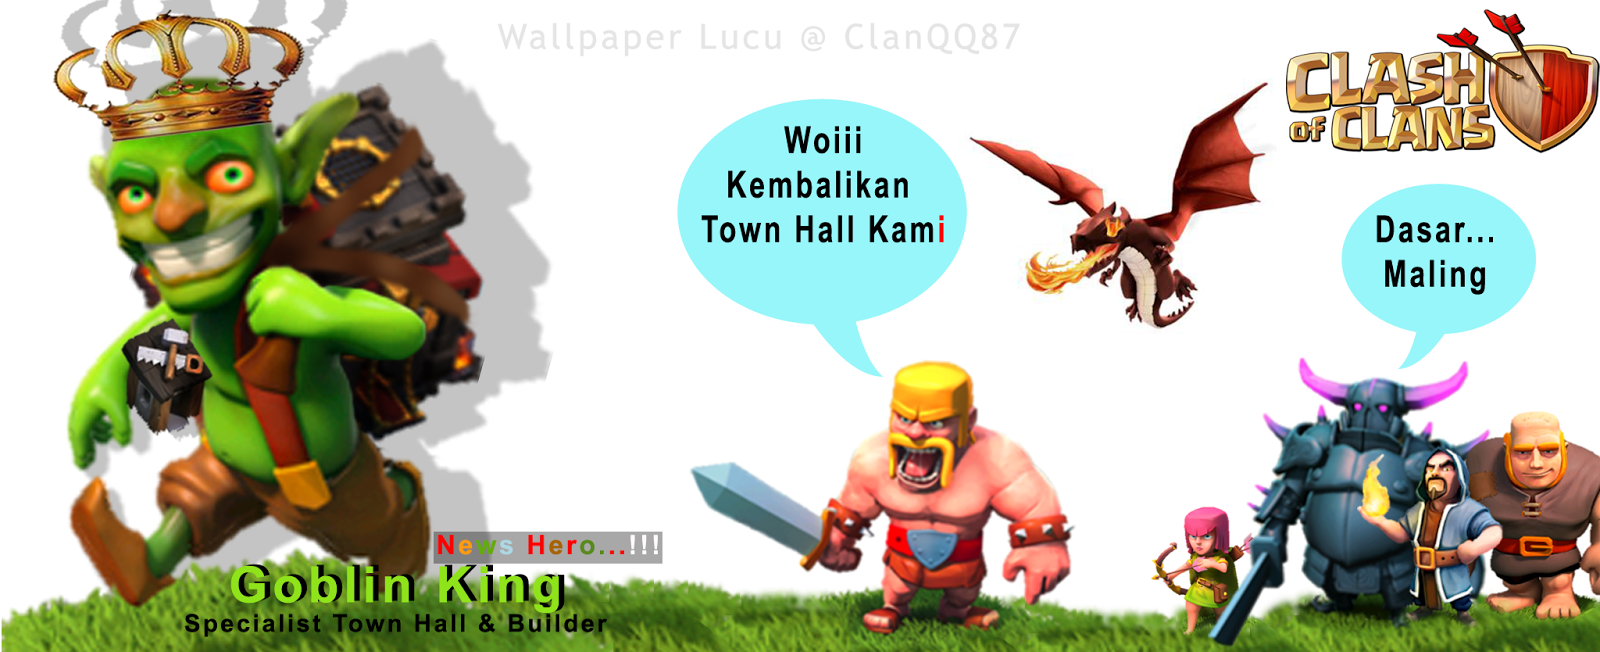 Foto Lucu Clash Of Clans Wall Breaker Terbaru Display Picture Unik